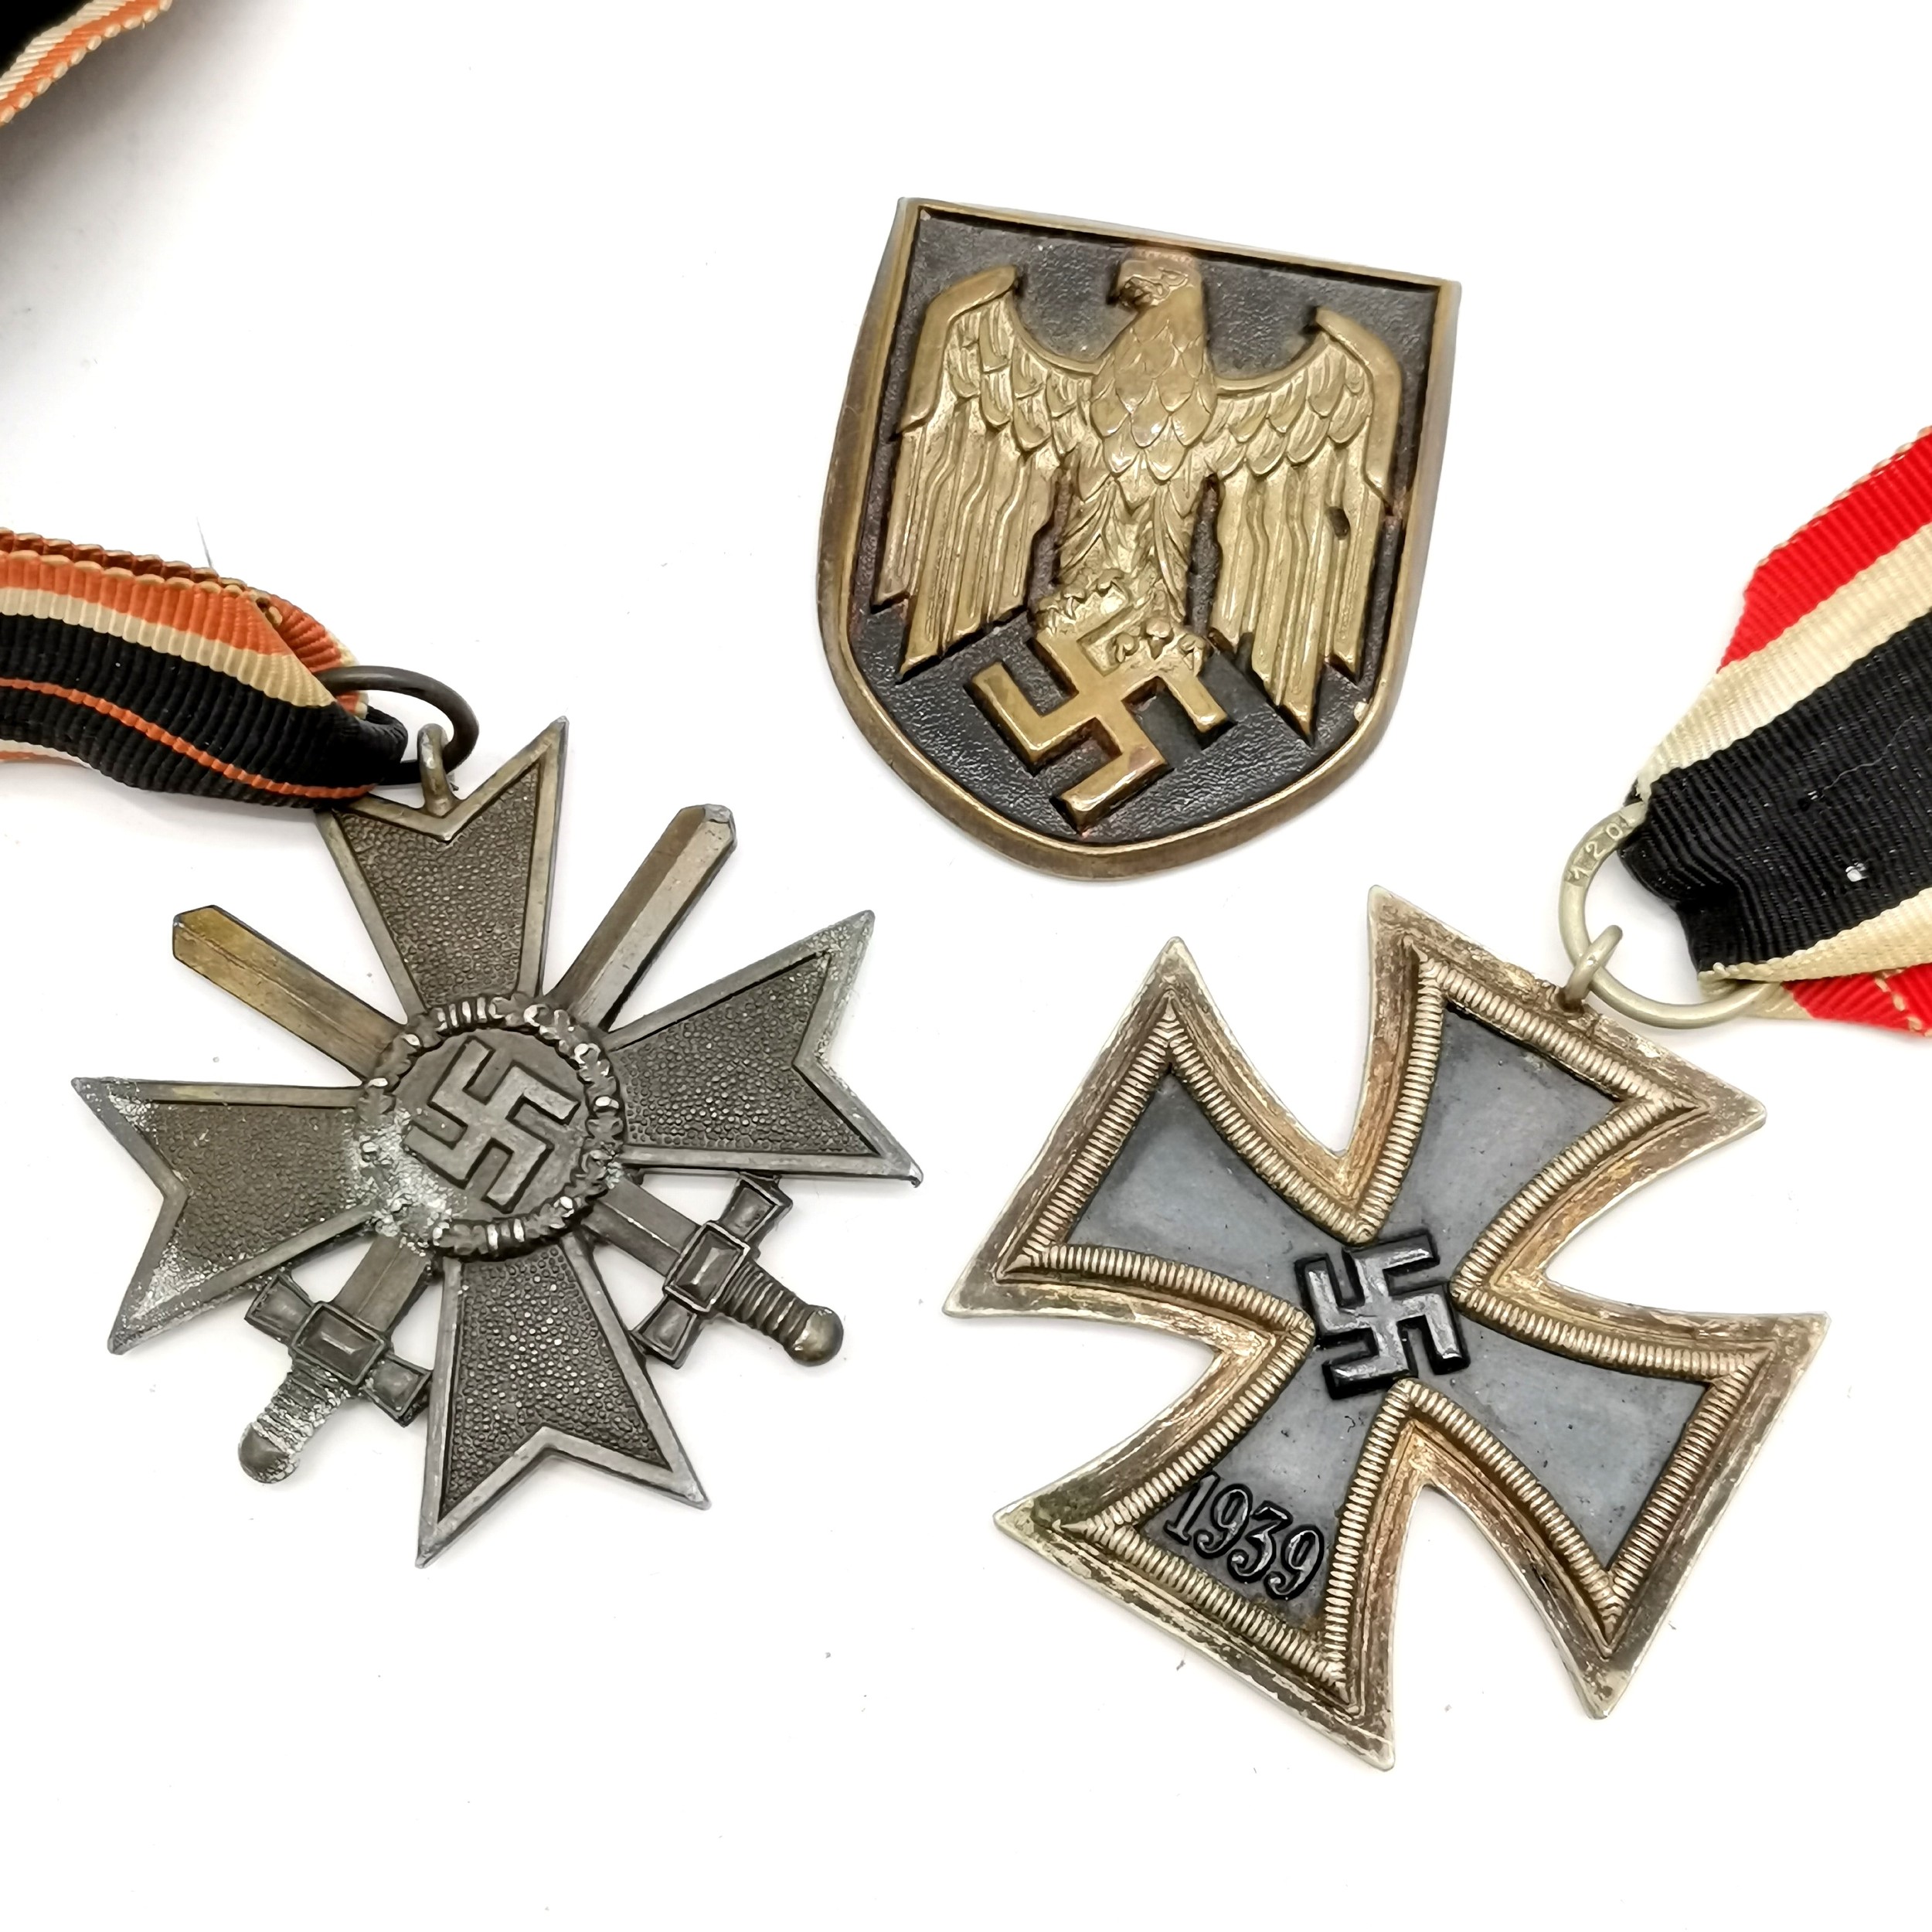 WW2 genuine second class iron cross medal on original ribbon, German war medal, tropical pith helmet - Image 2 of 4